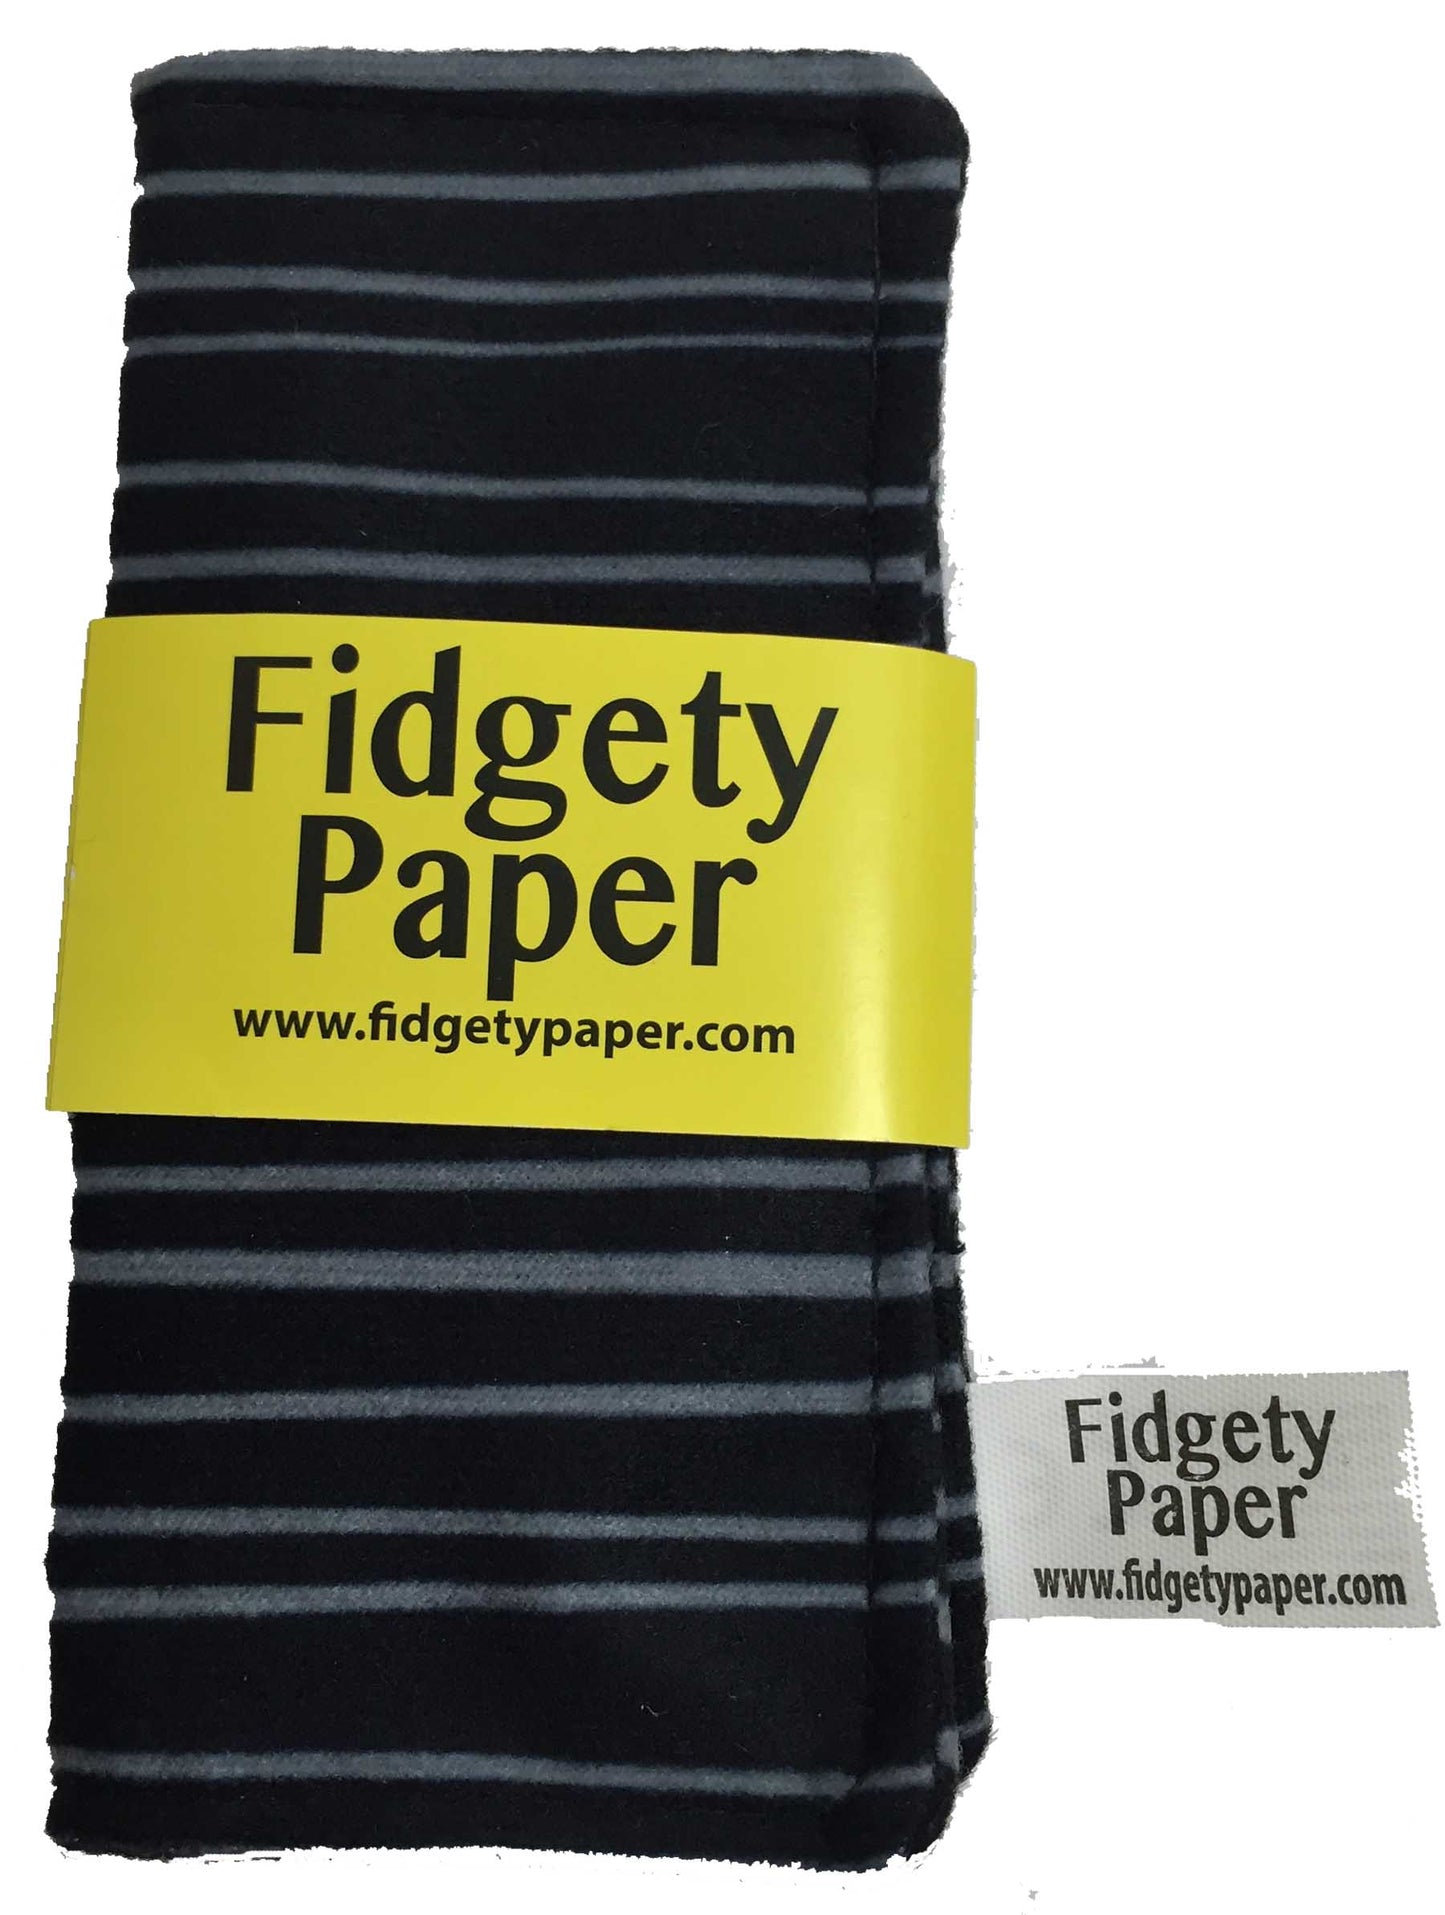 Black/Gray Pocket-Sized Fidgety Paper